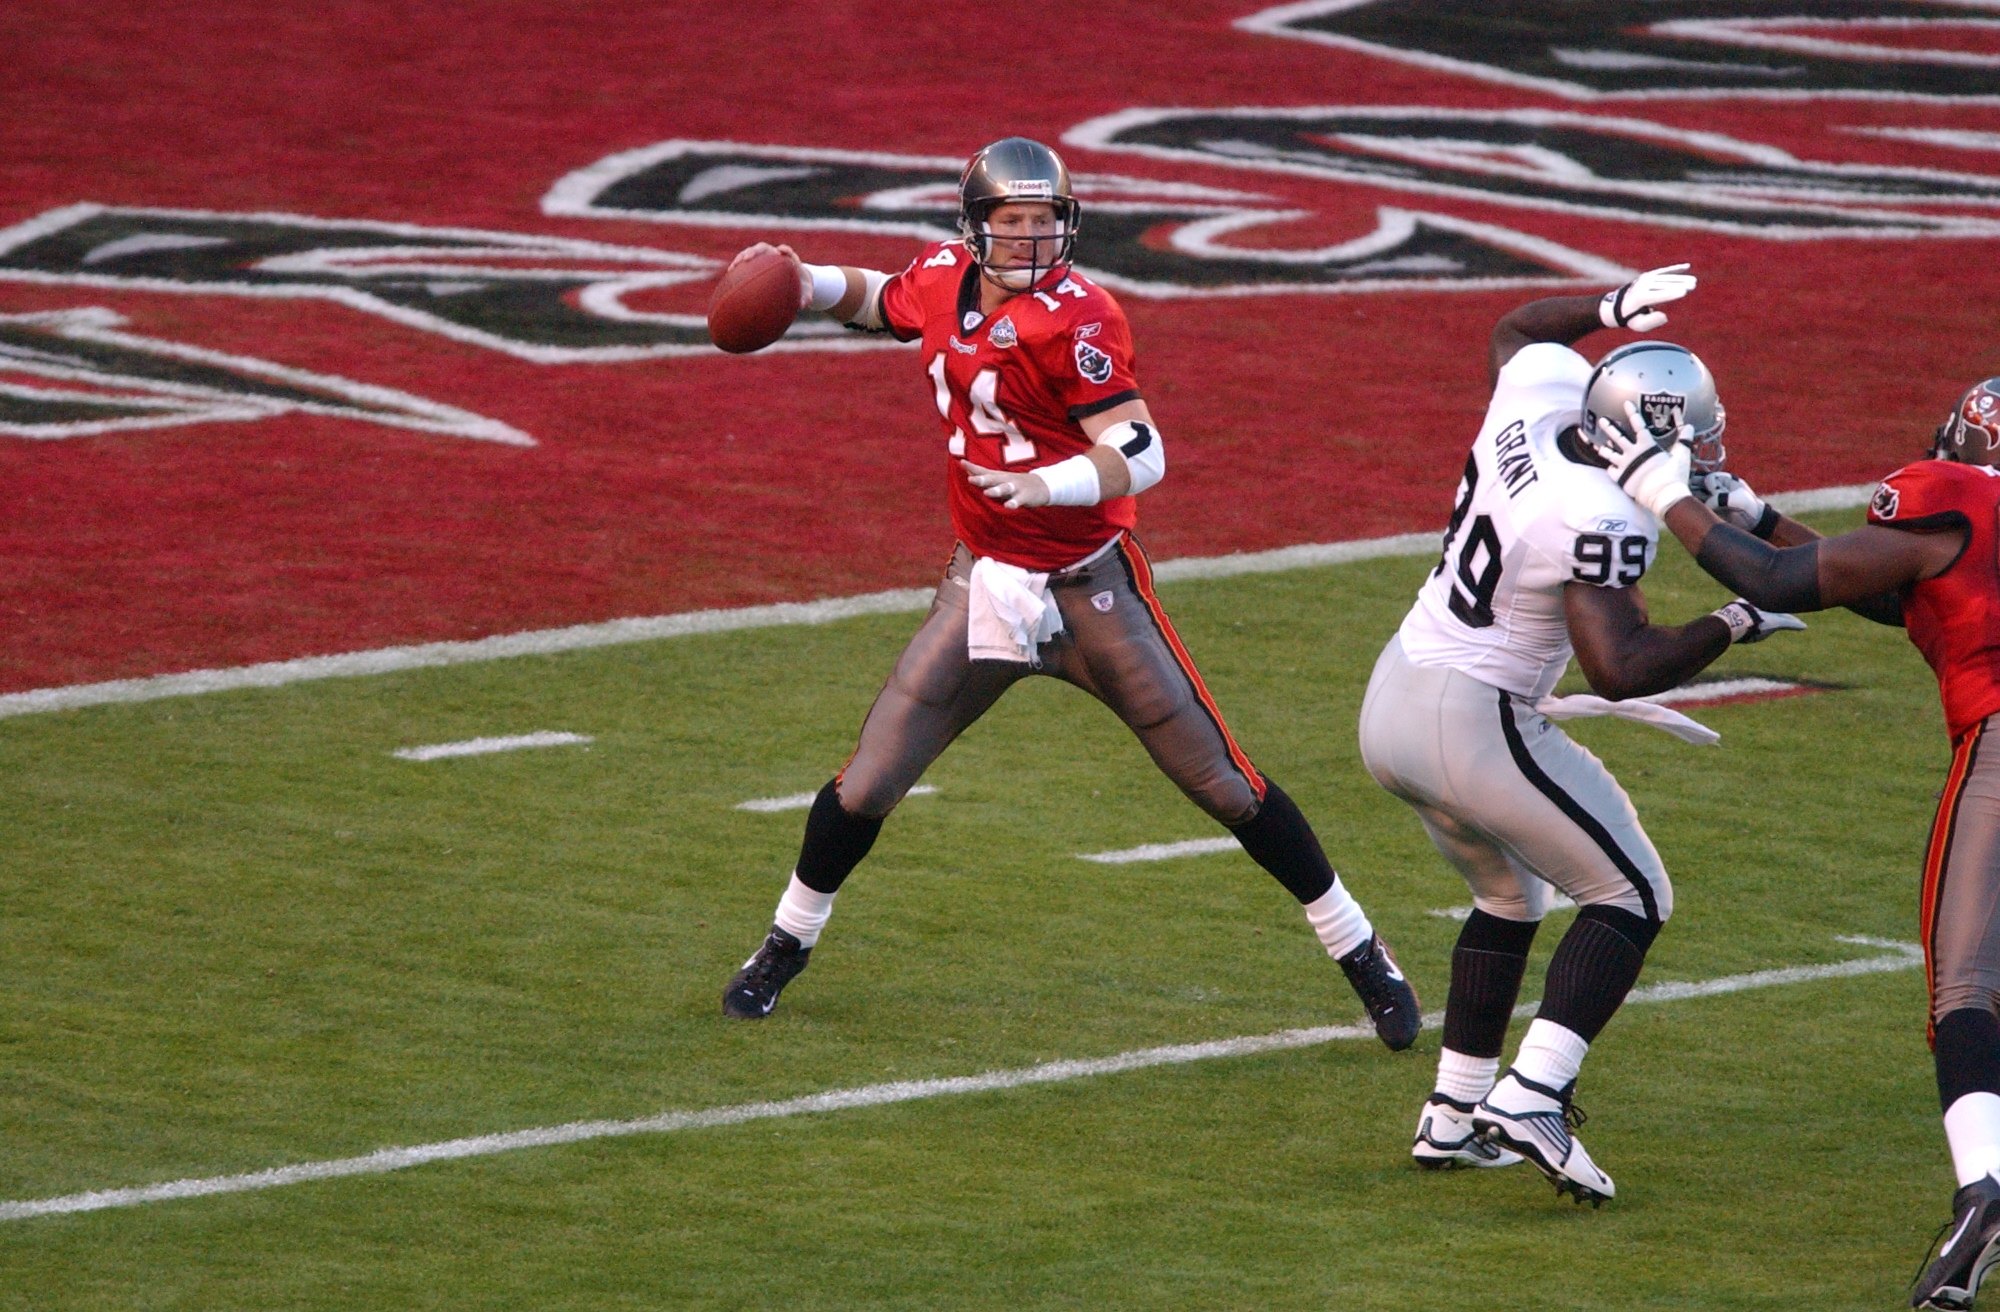 Brad Johnson throws a pass during Super Bowl 37.